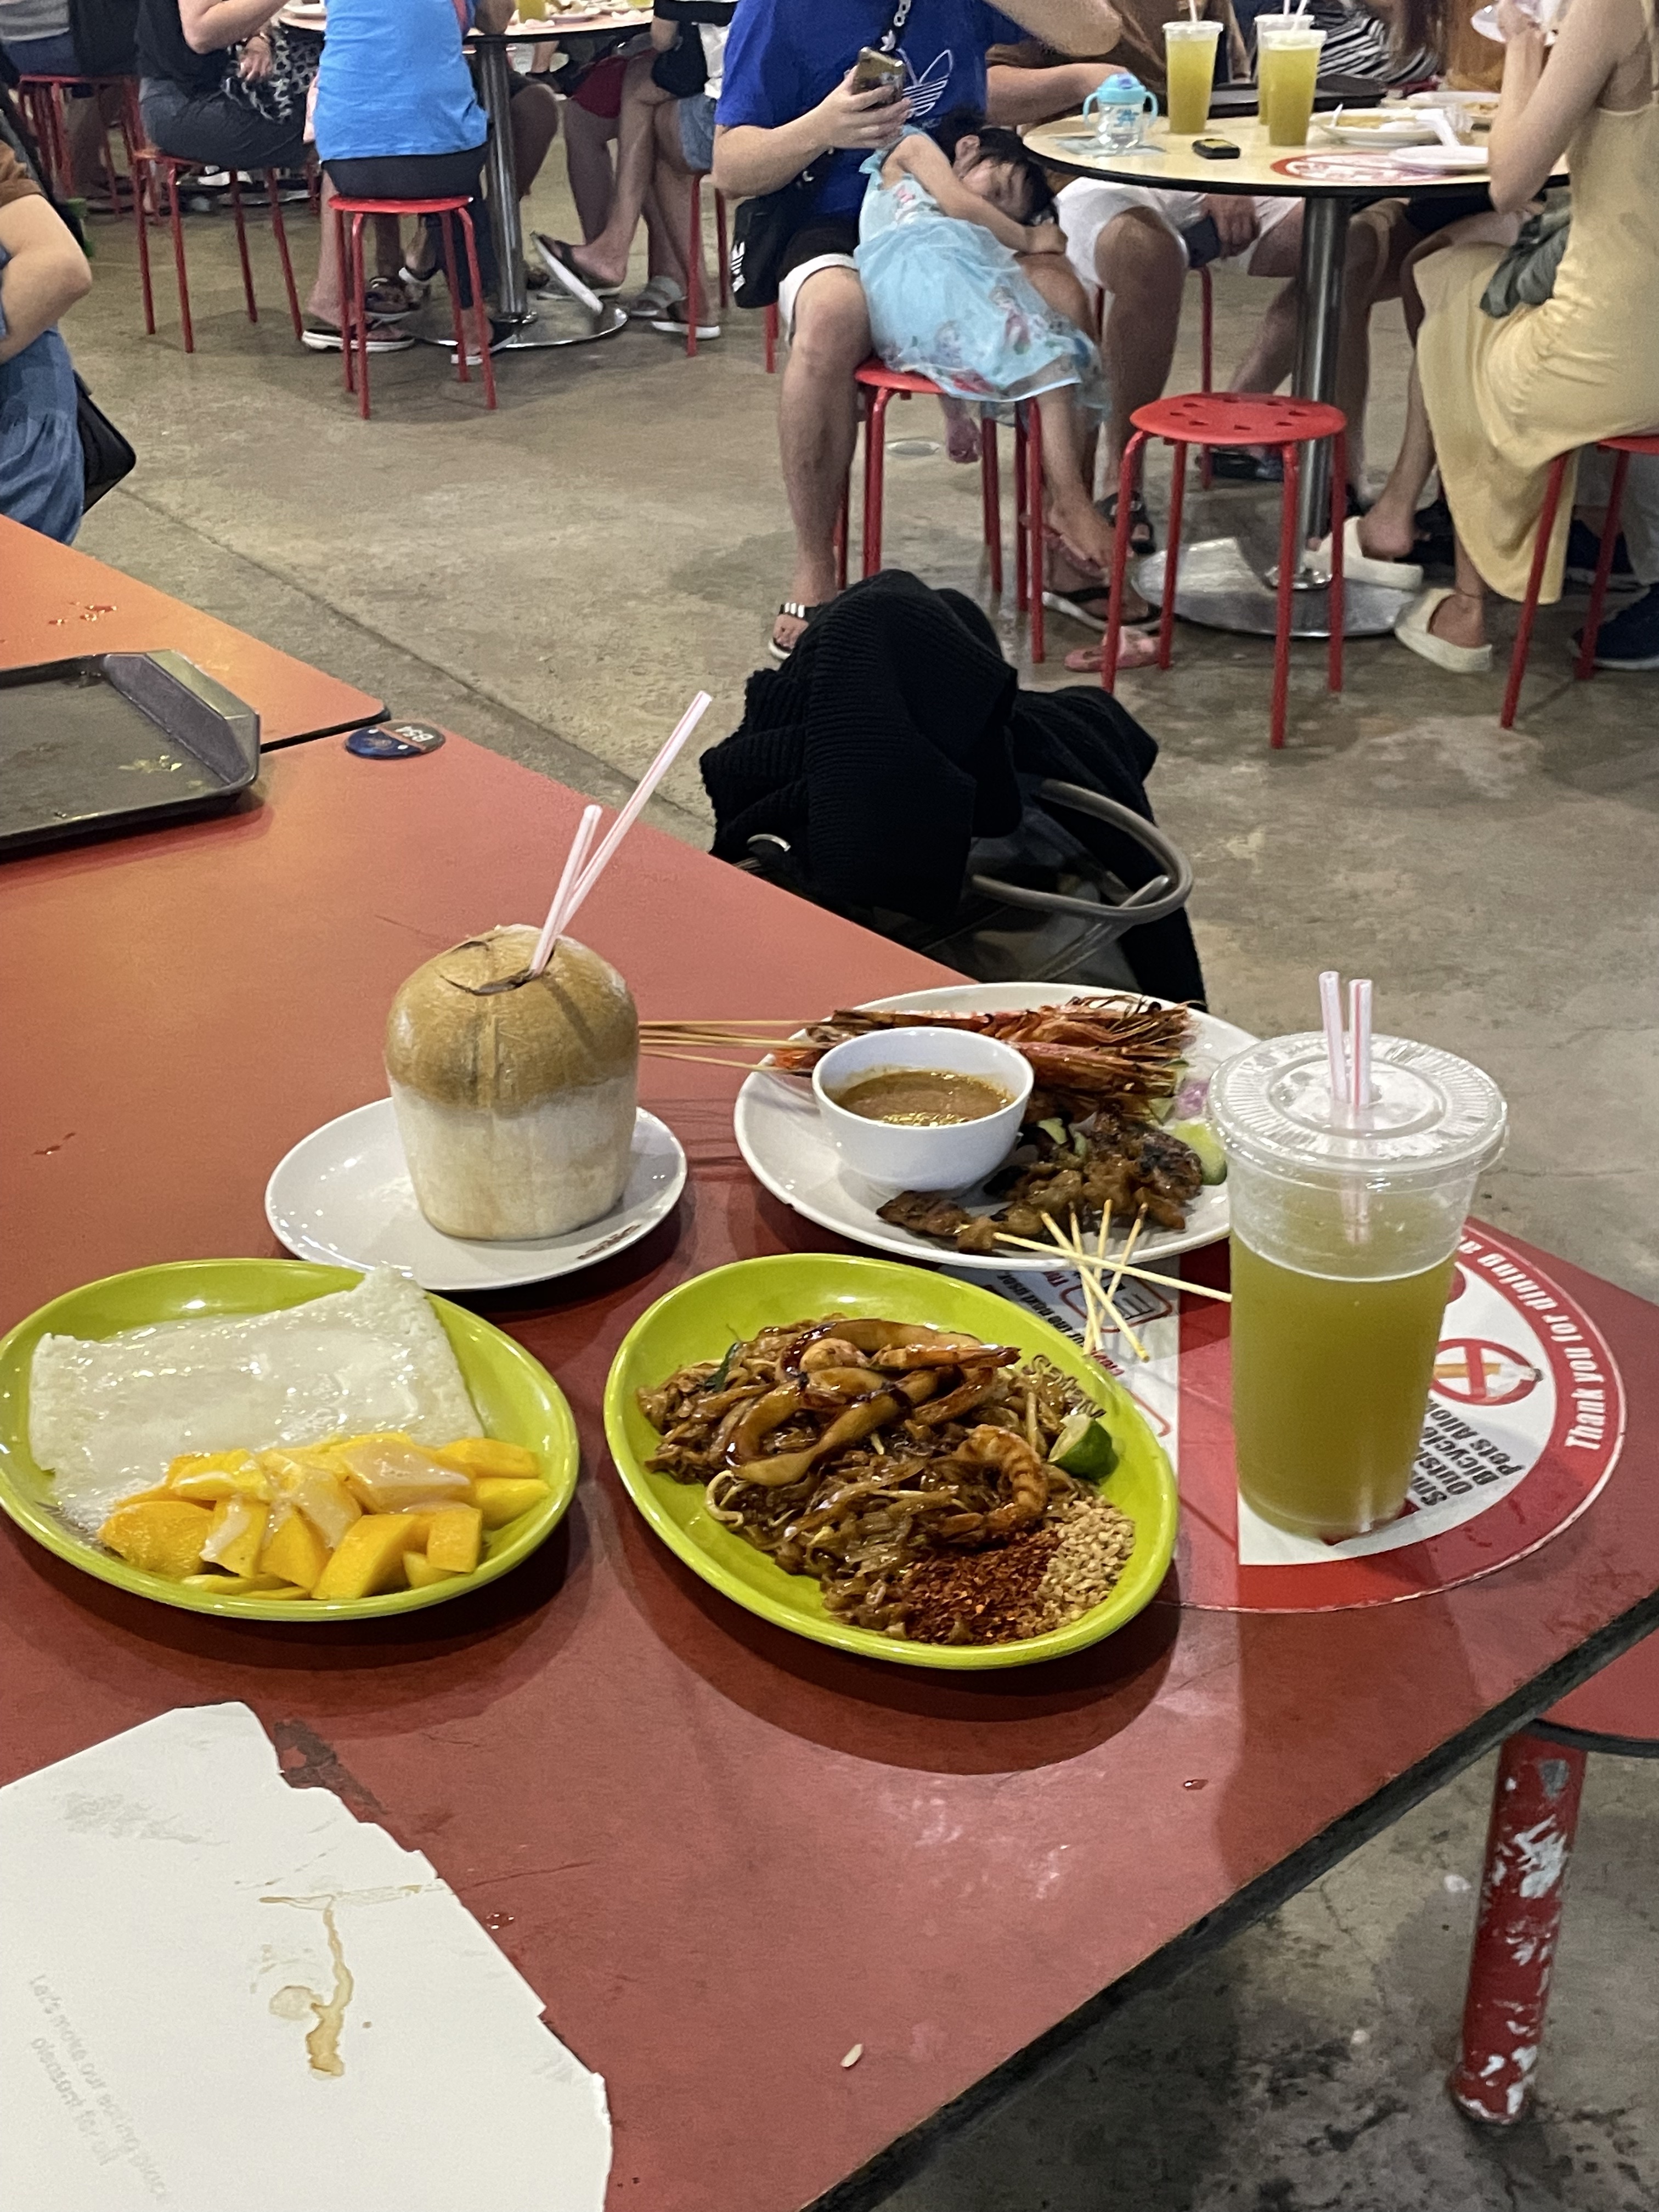 Food of Singapore